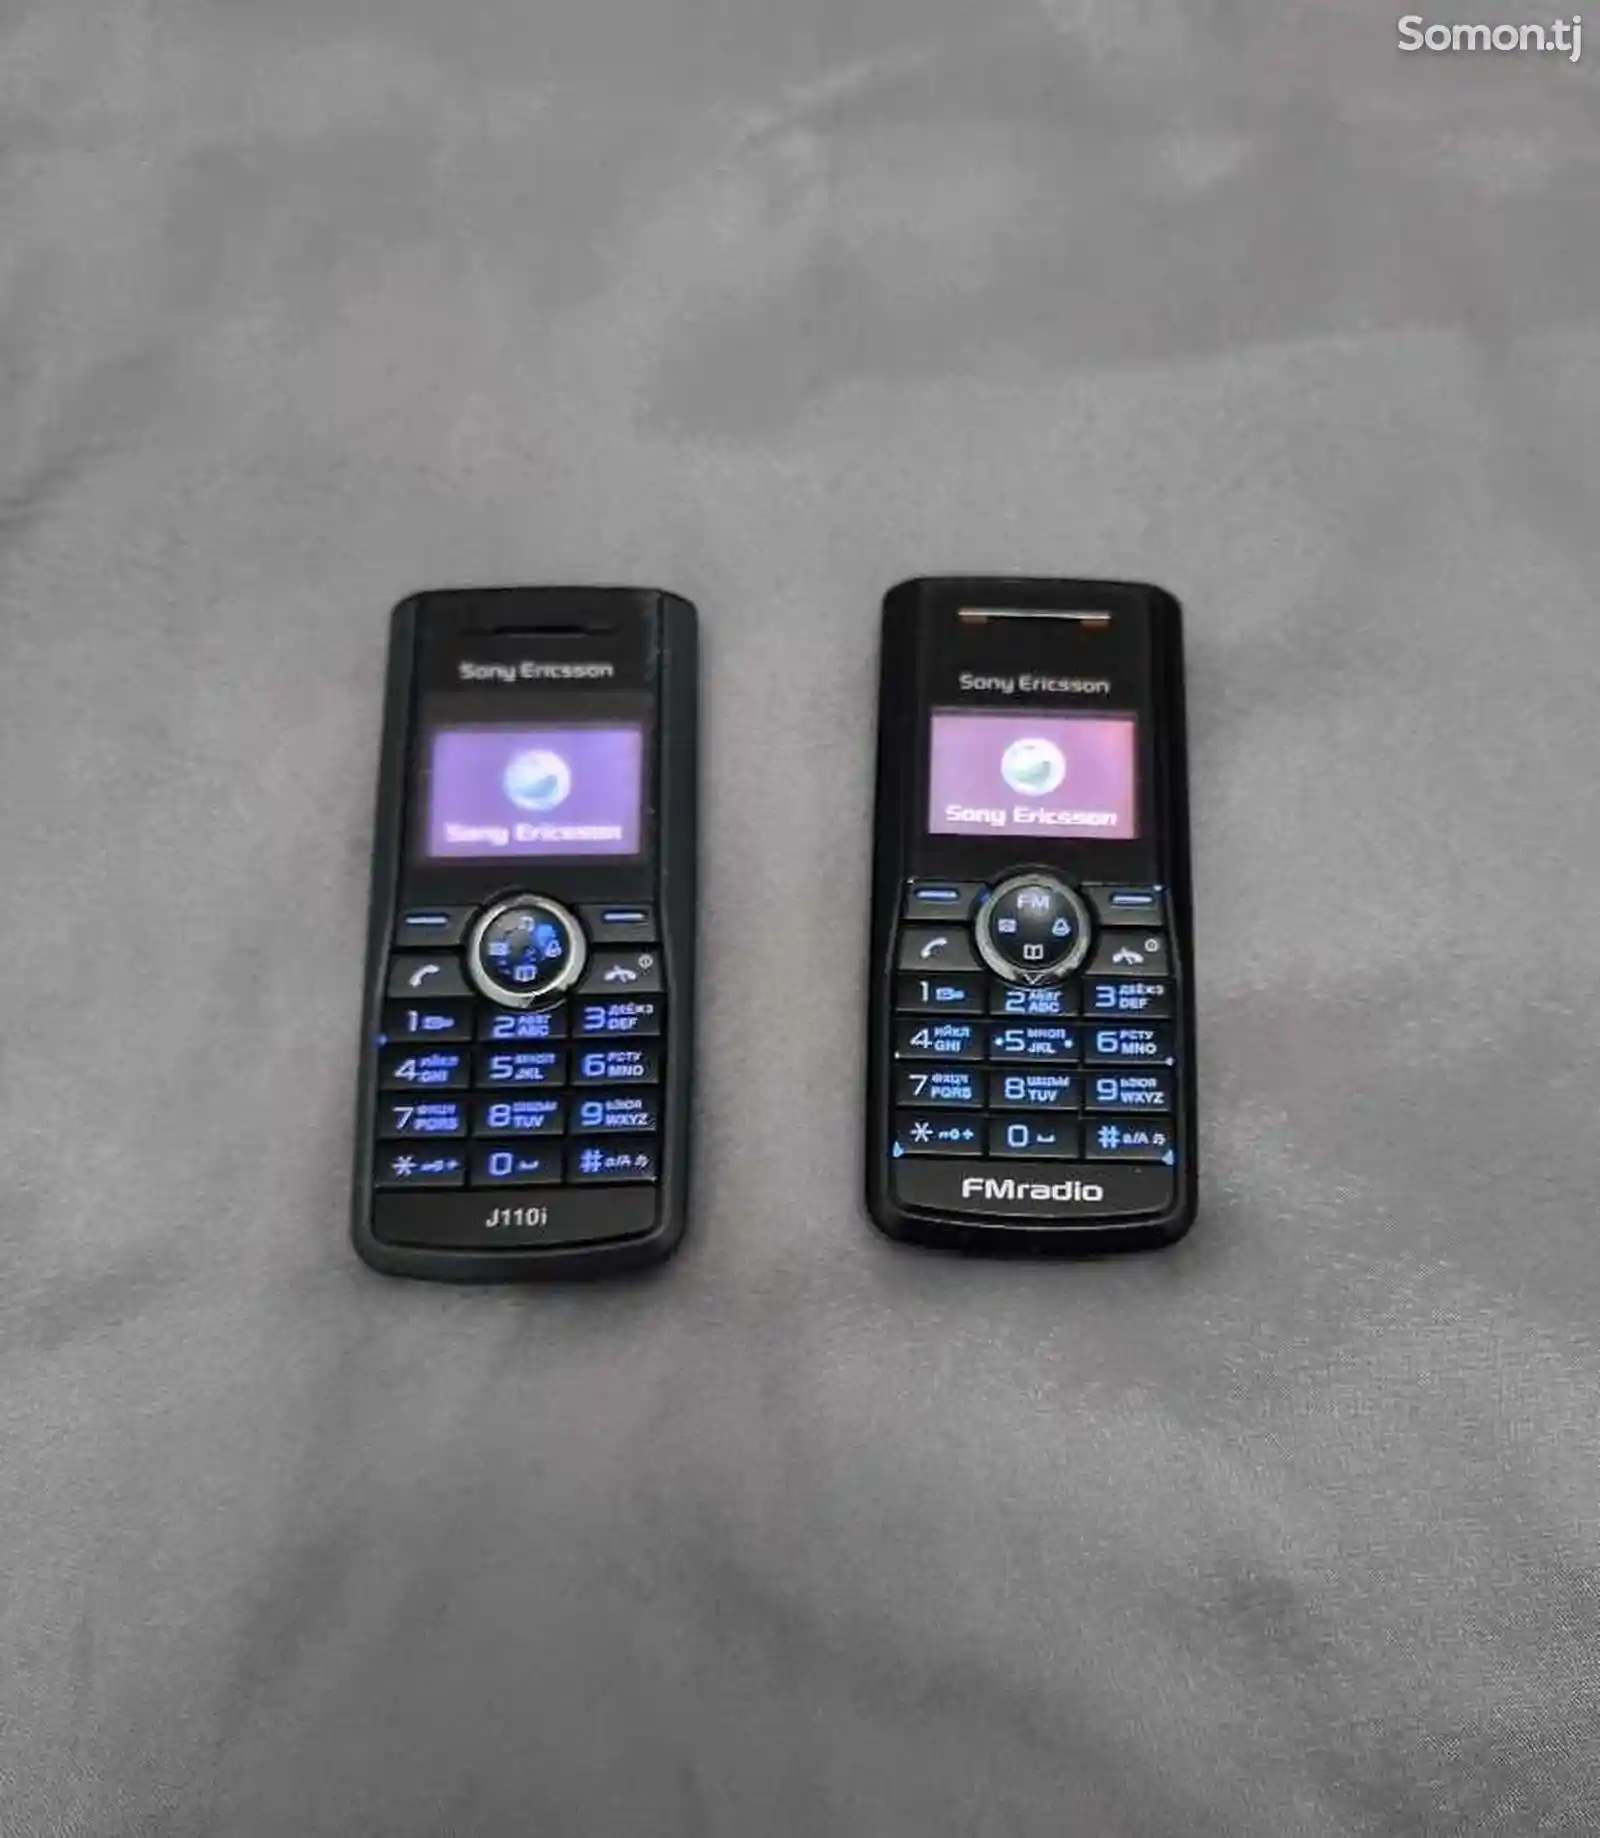 Sony Ericsson J110i, J120i-1